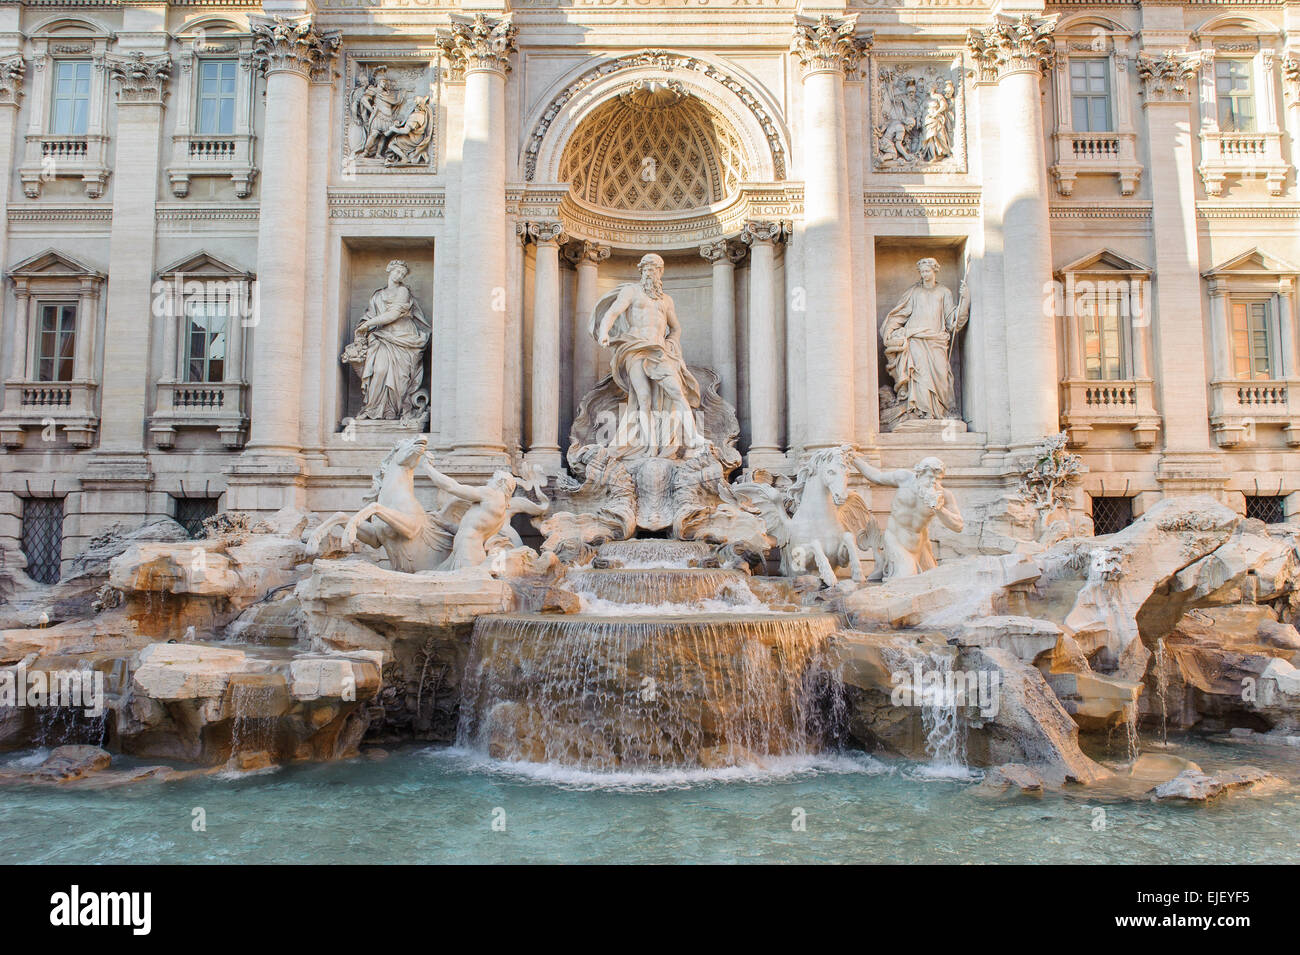 Trevi-Brunnen, Fontana di Trevi in italienischer Sprache, ist ein Brunnen in Rom, Italien. Stockfoto